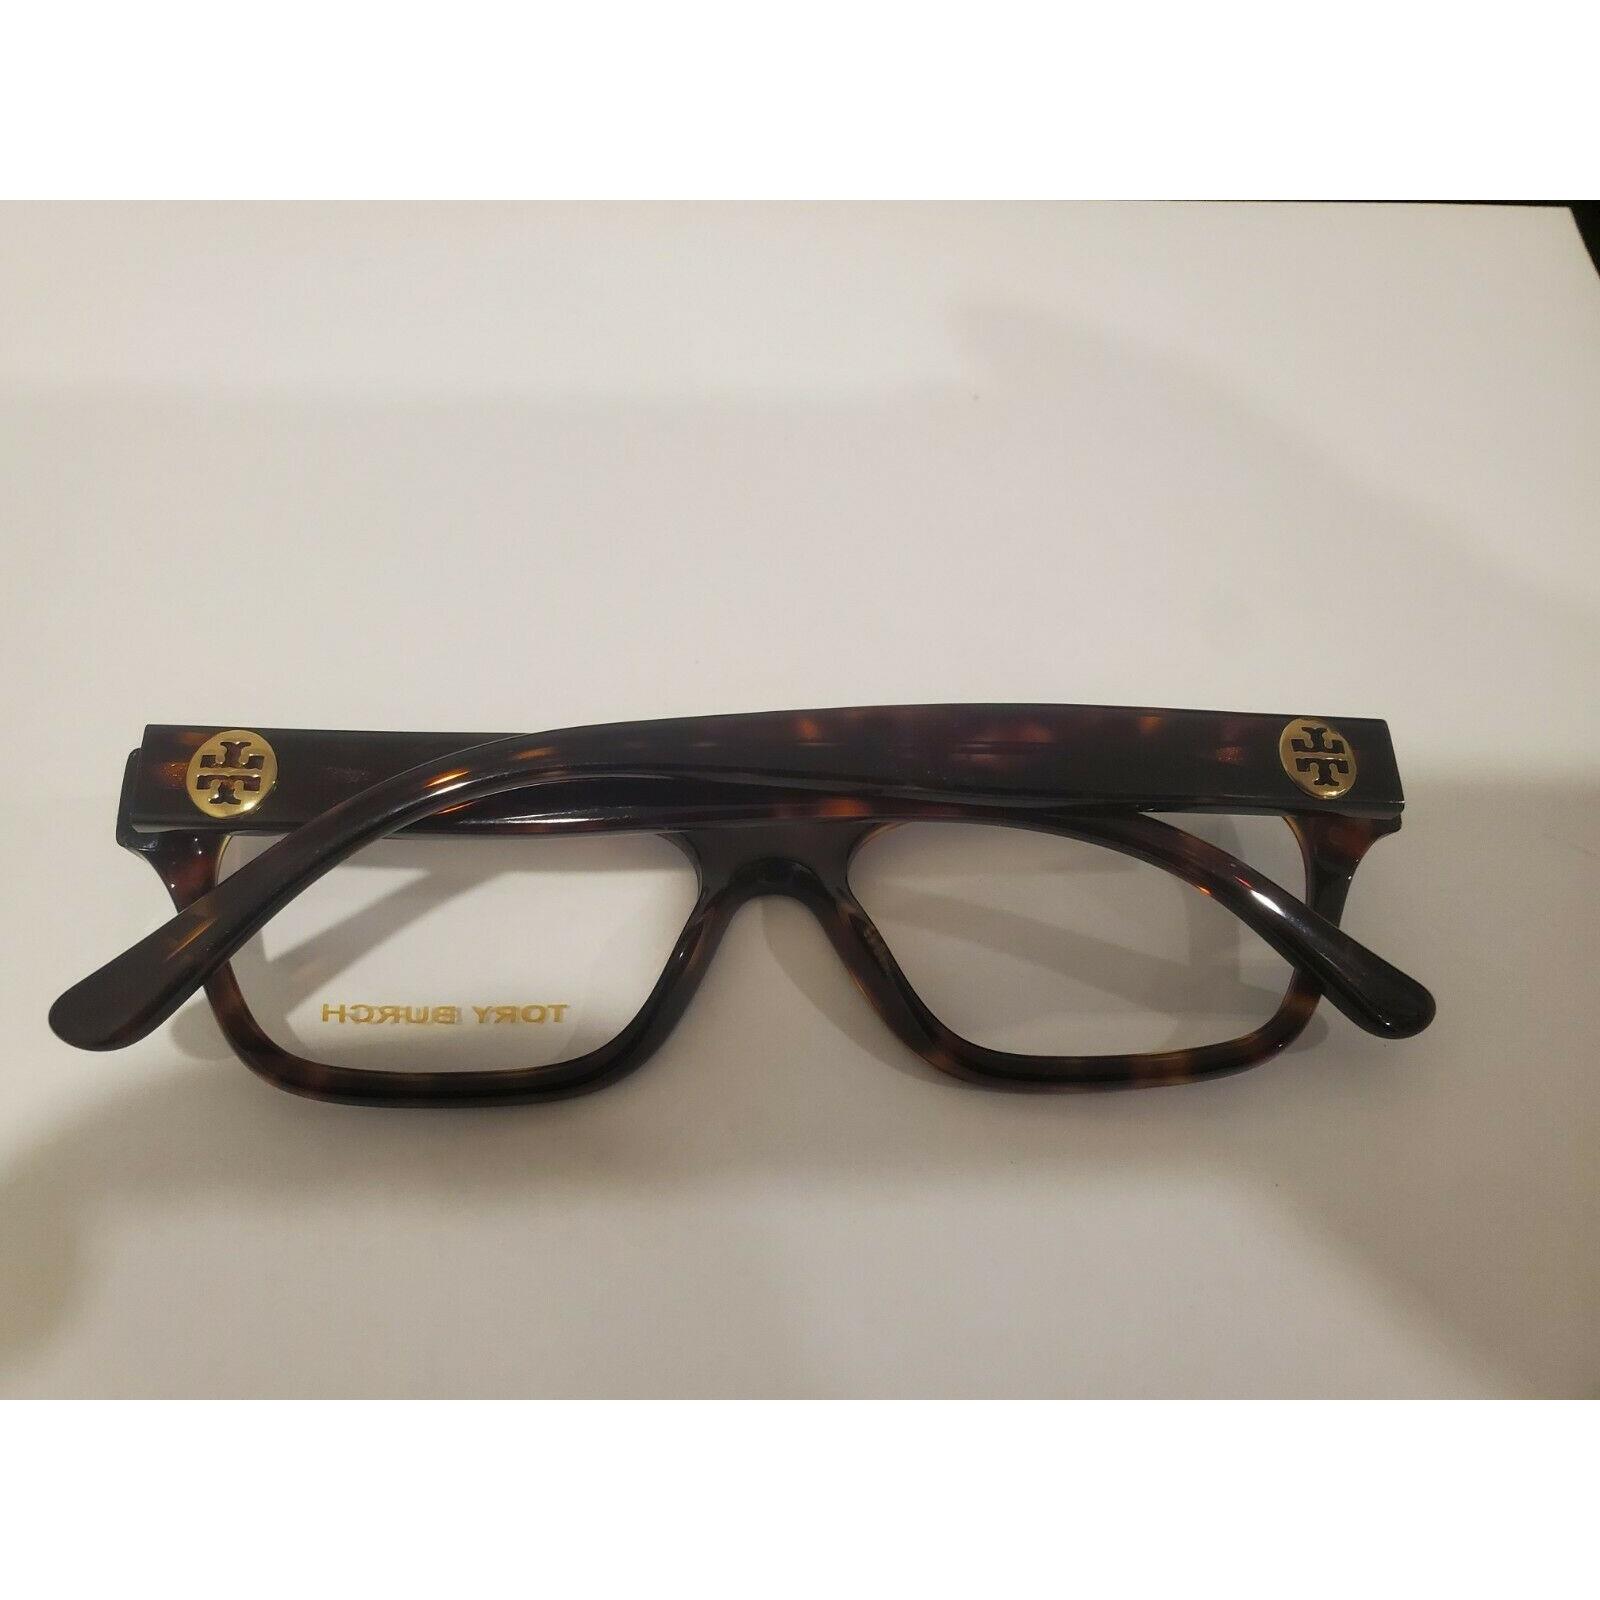 Tory Burch eyeglasses  - Dark Tortoise Frame 3